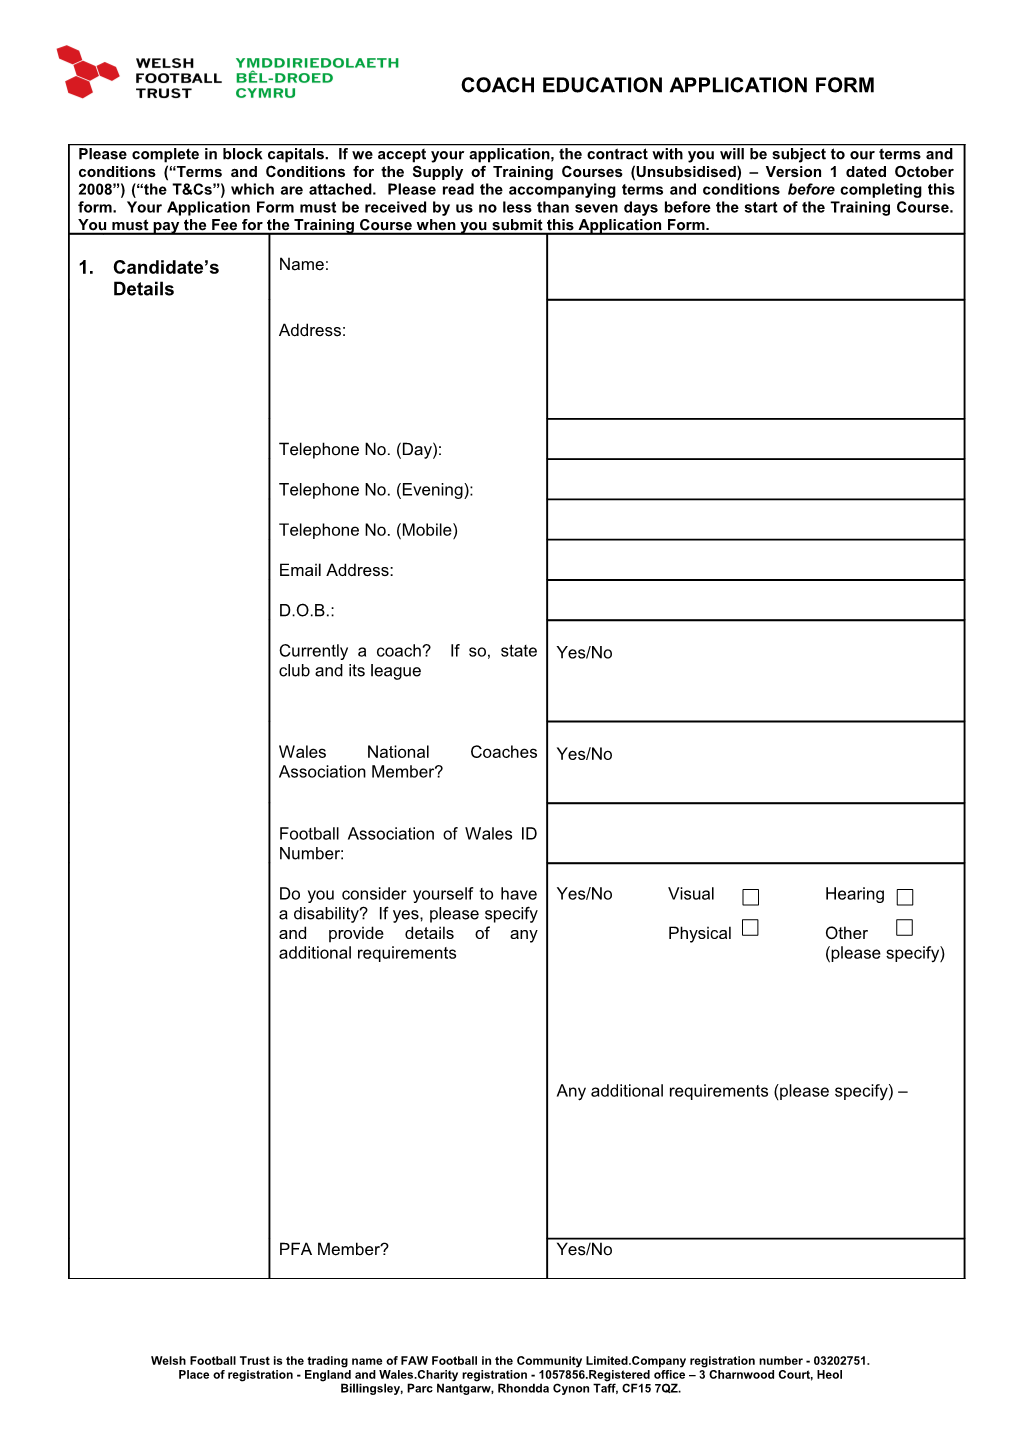 Coach Education Application Form